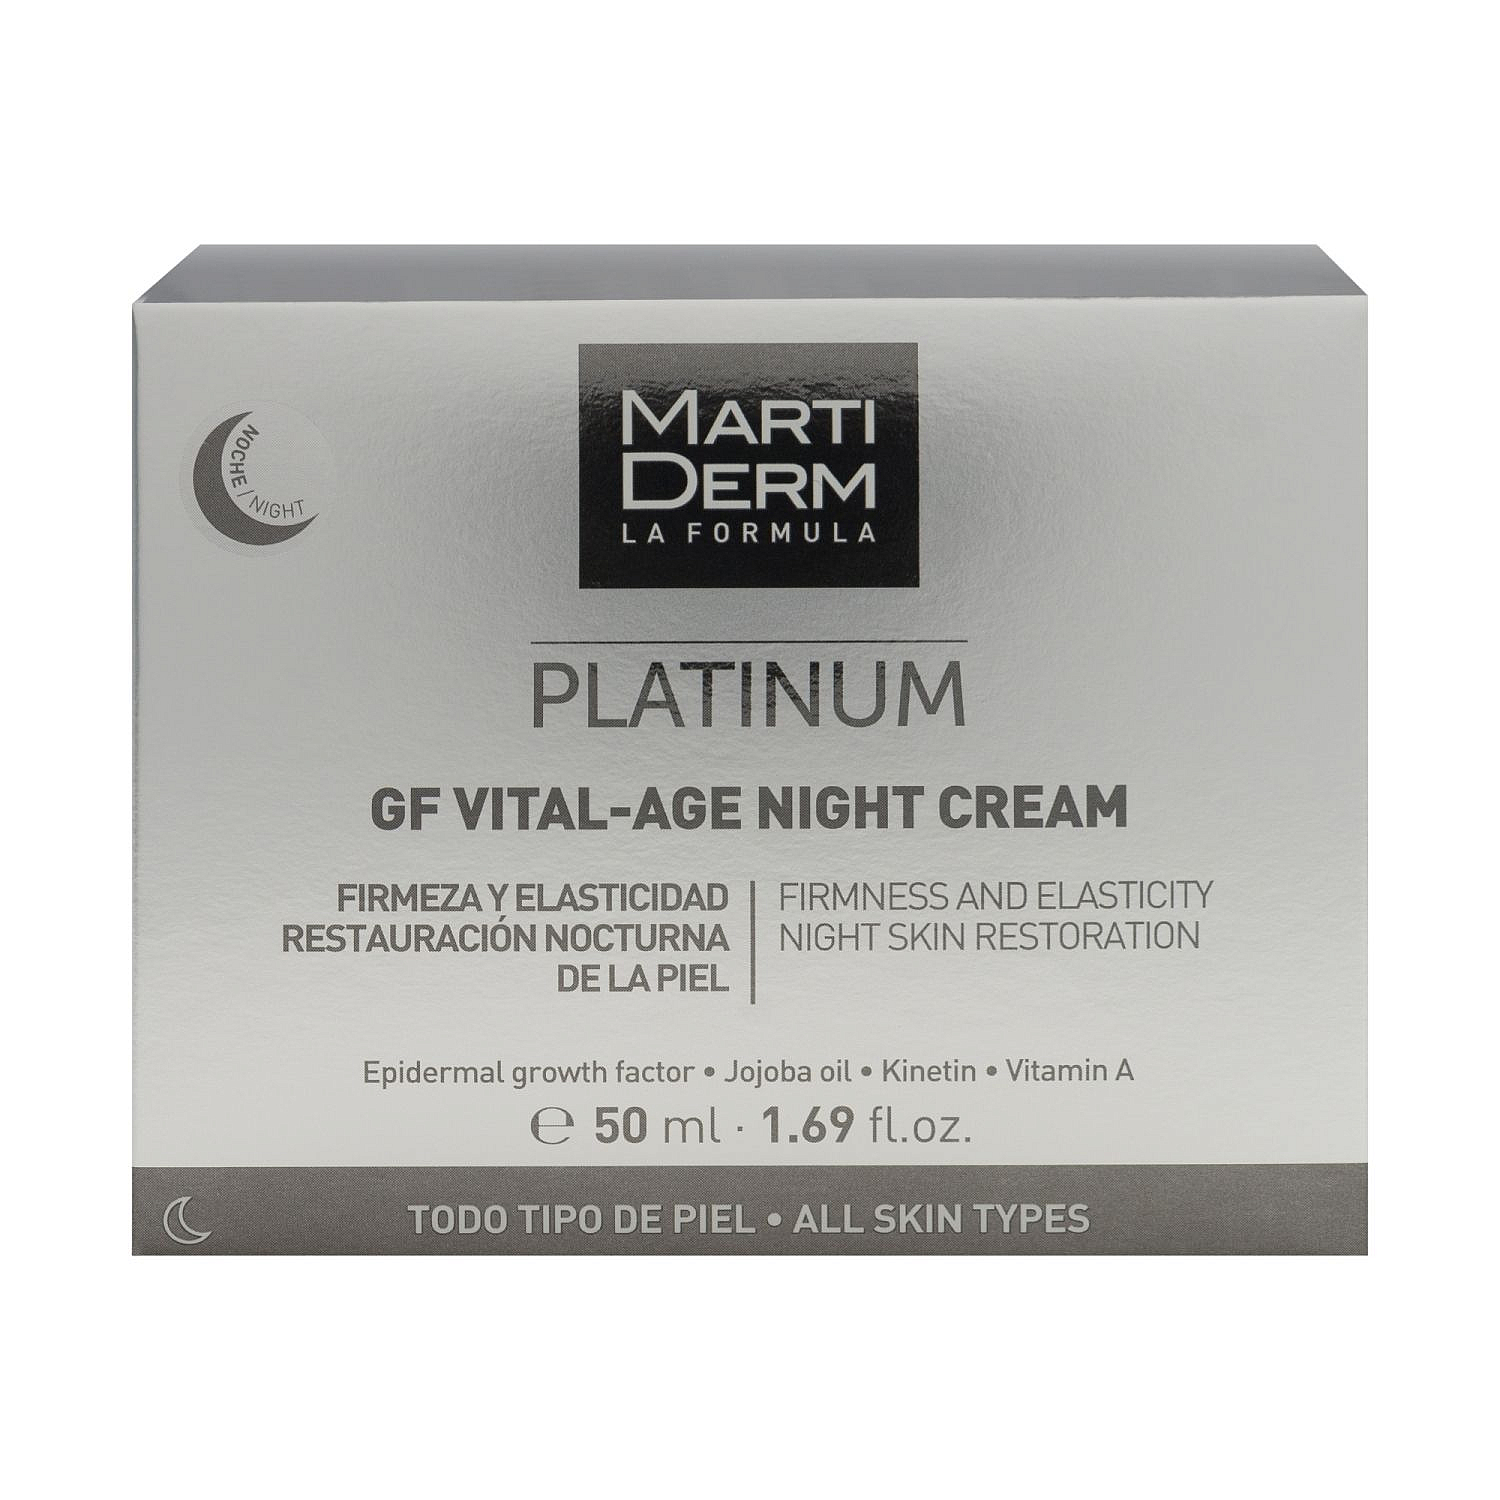 martiderm gf vital age night cream platinum 50ml